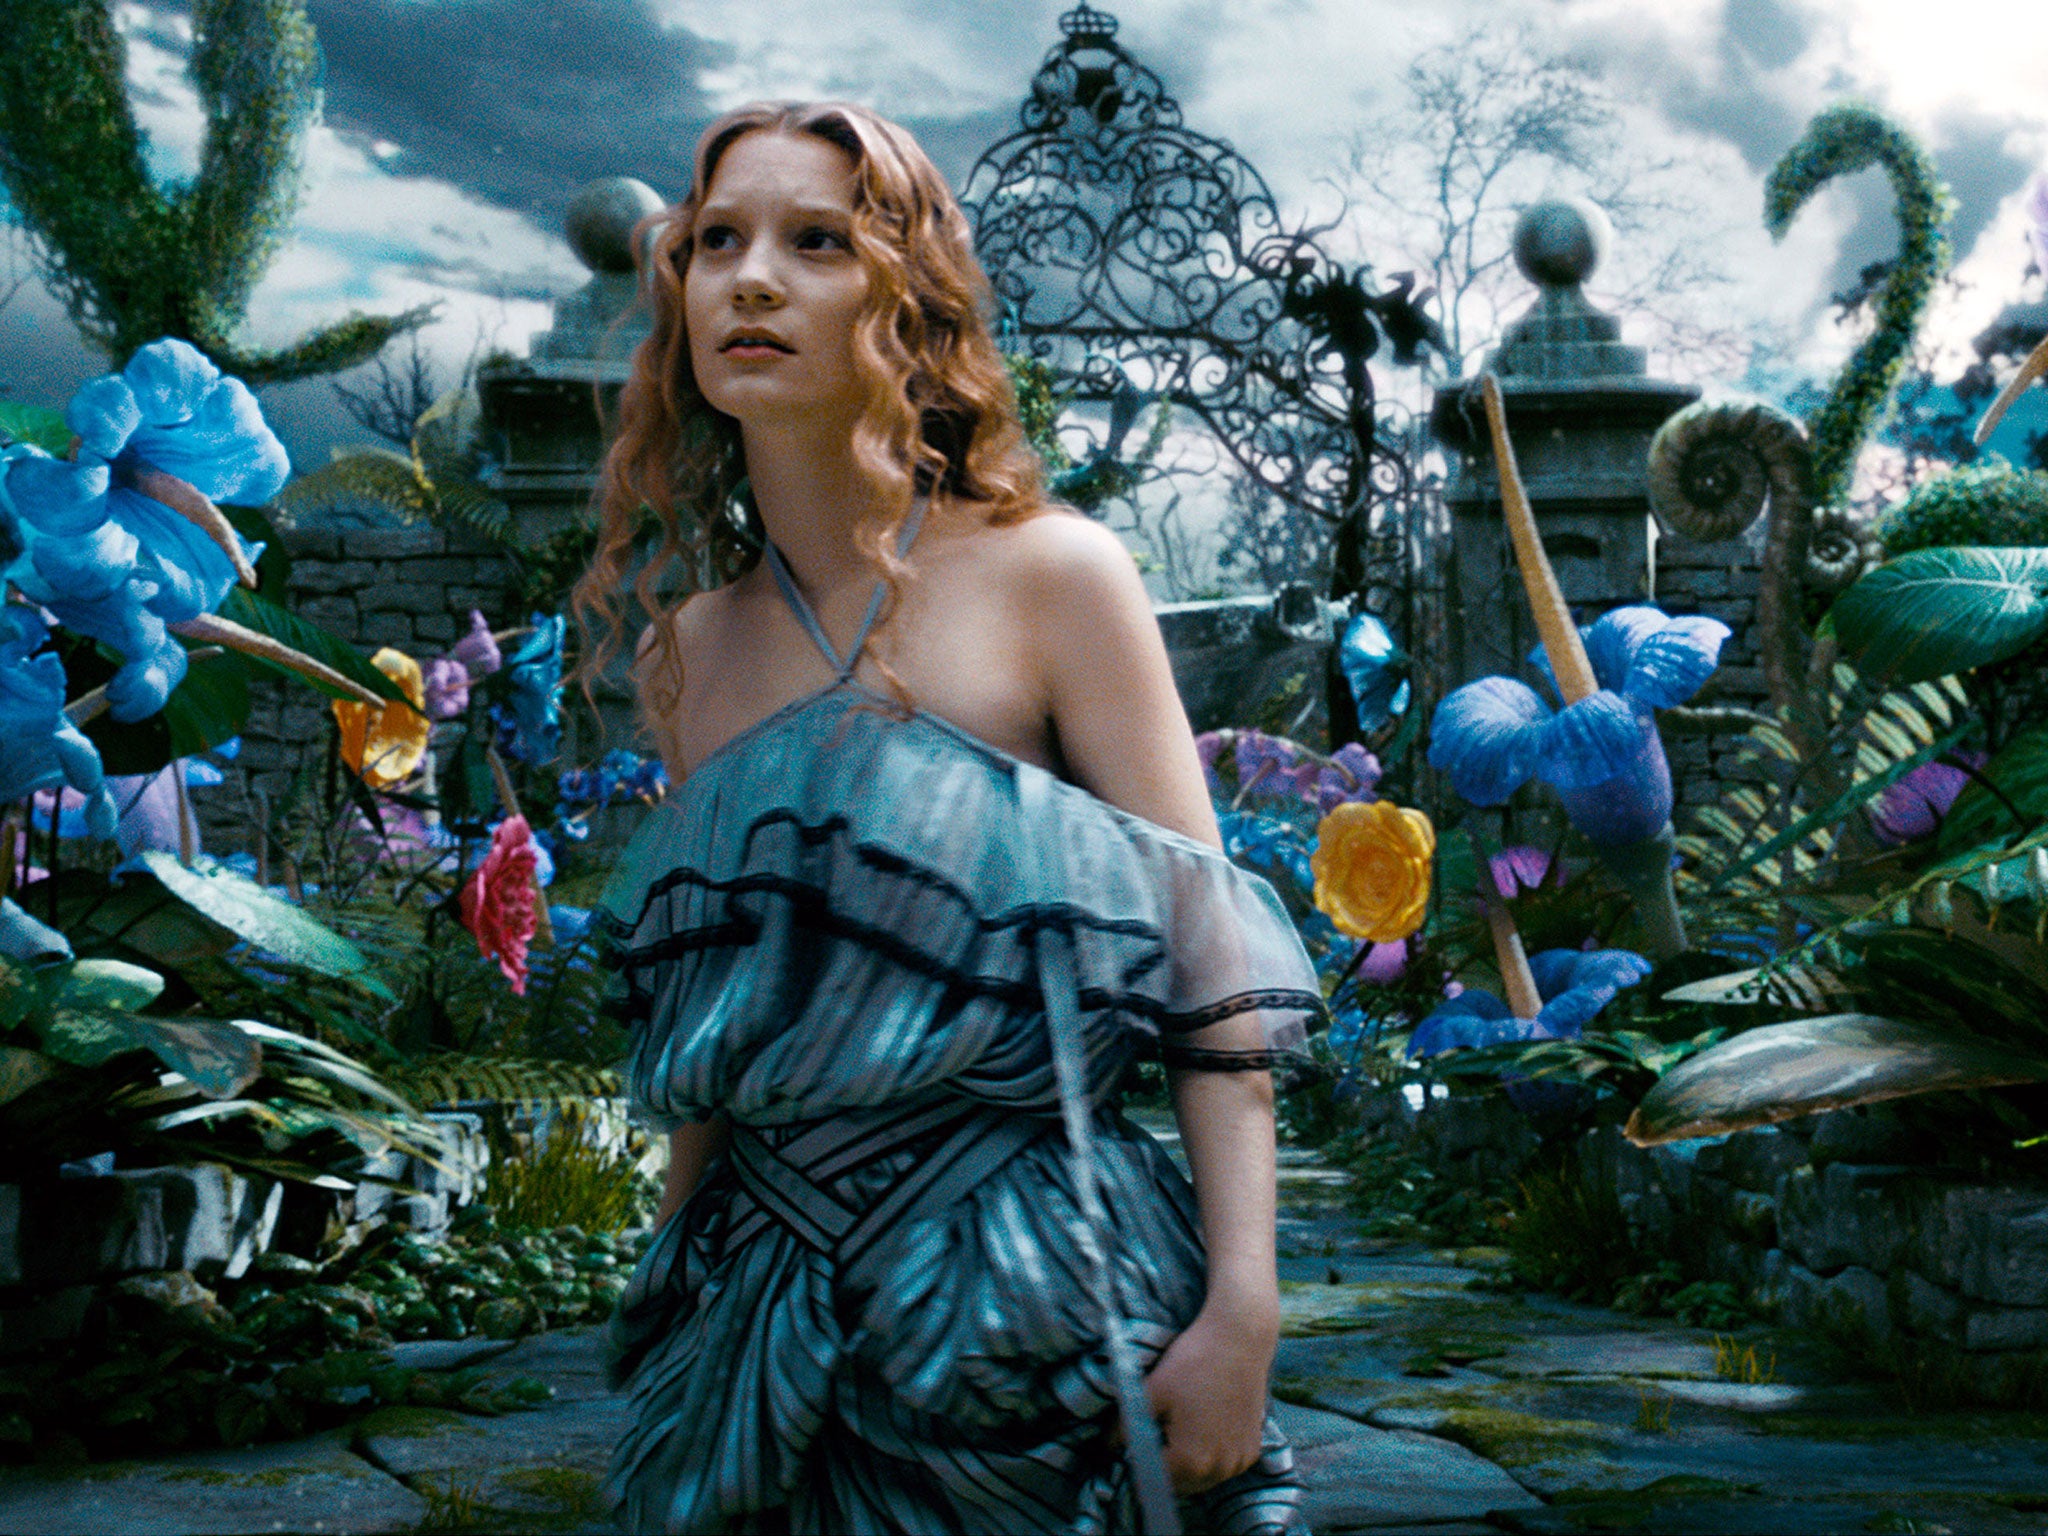 Mia Wasikowska stars as Alice in 2010's Alice in Wonderland